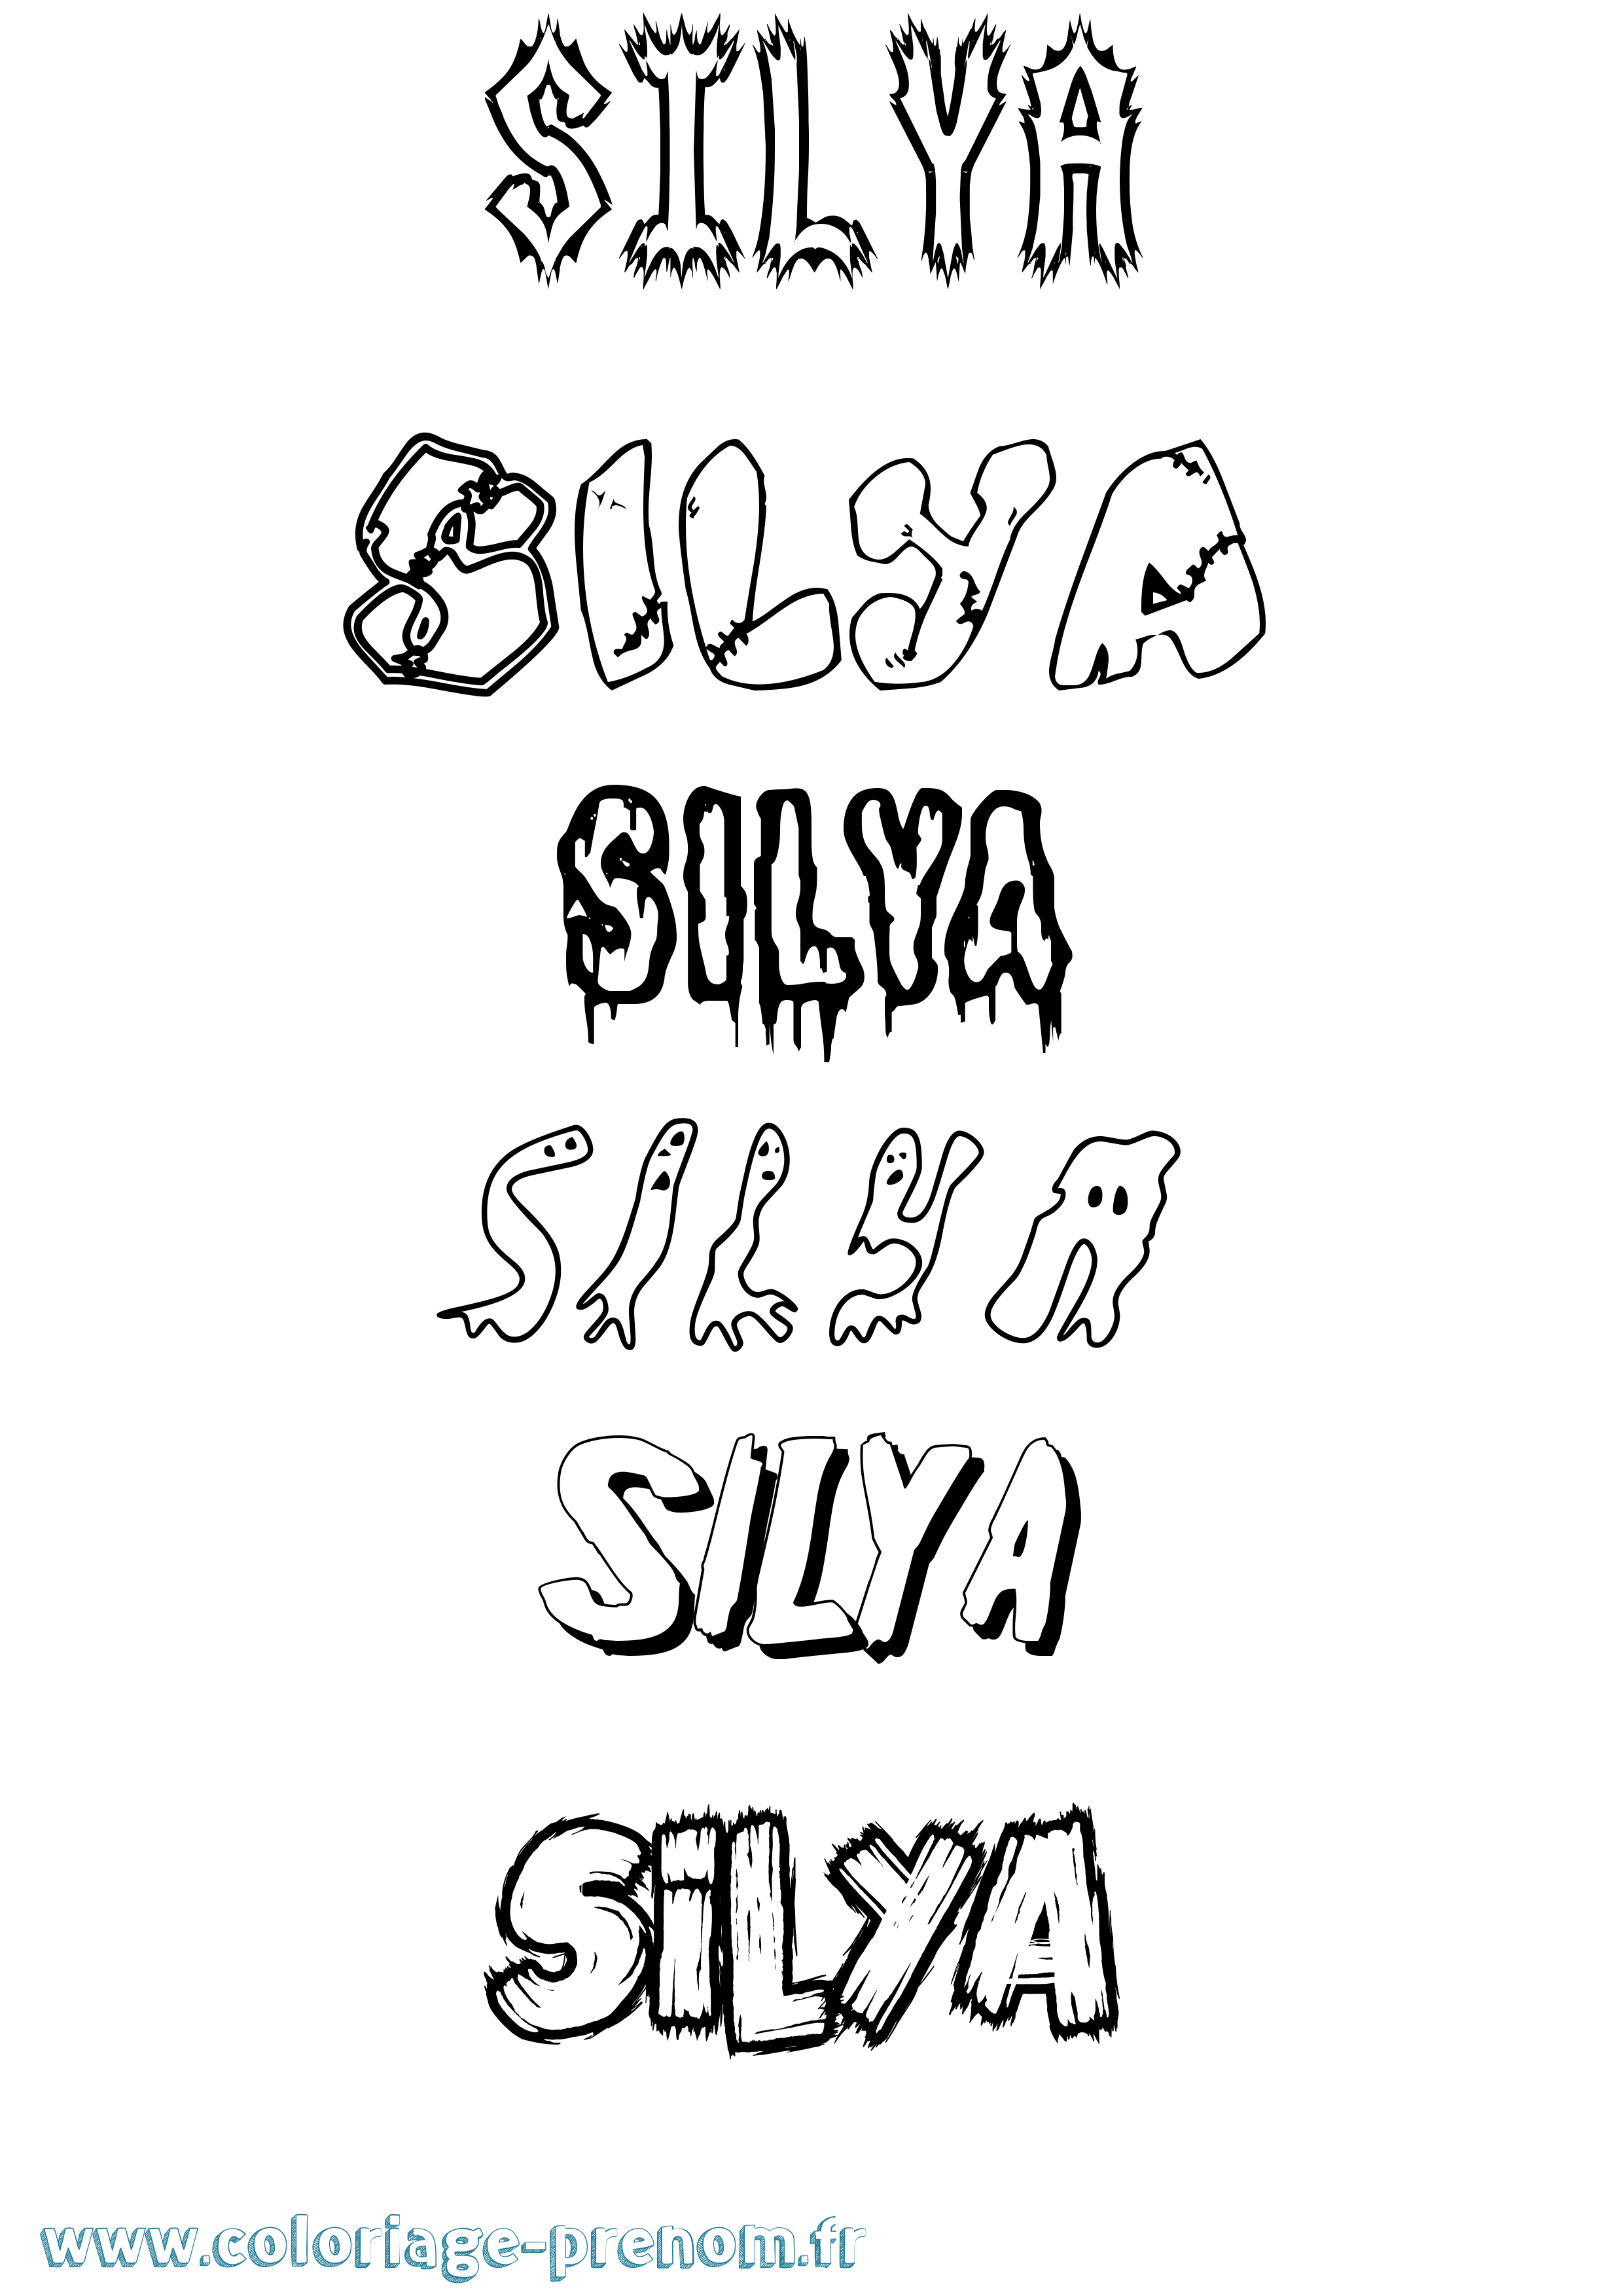 Coloriage prénom Silya Frisson